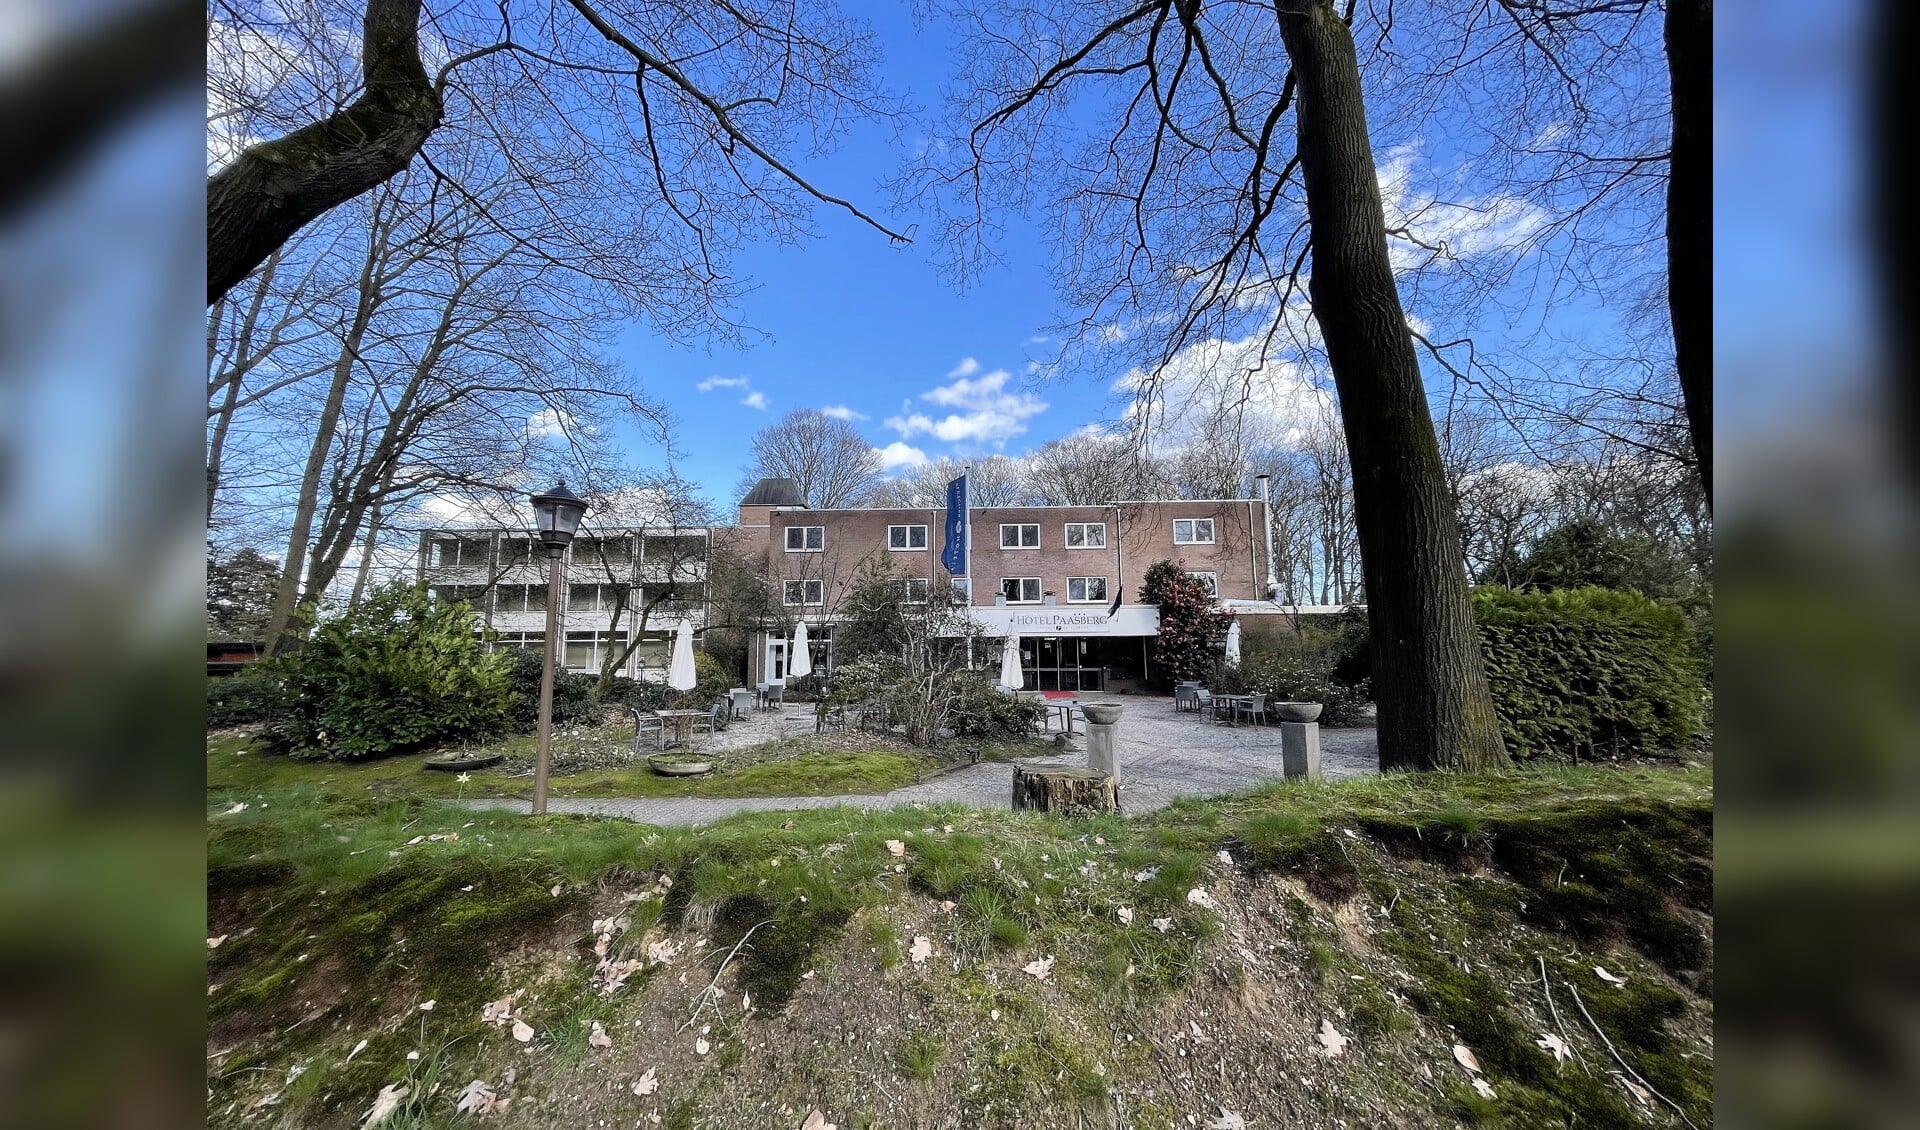 Hotel Paasberg in Lochem (archieffoto: Henri Bruntink)